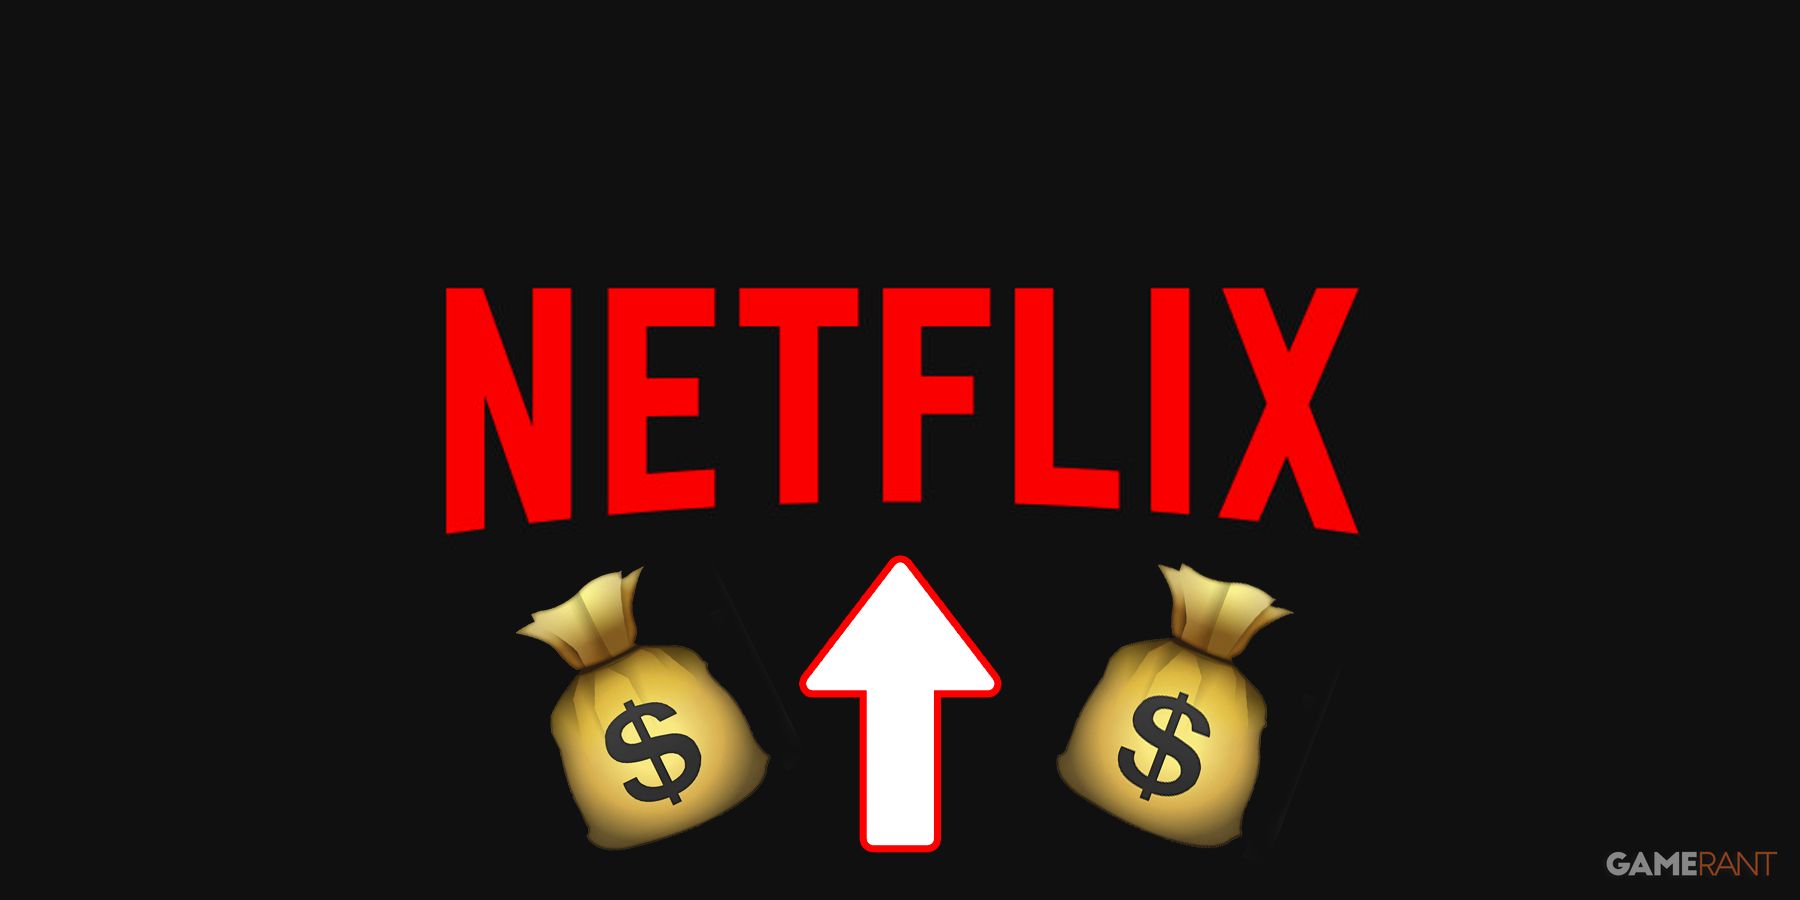 Netflix Price Increase